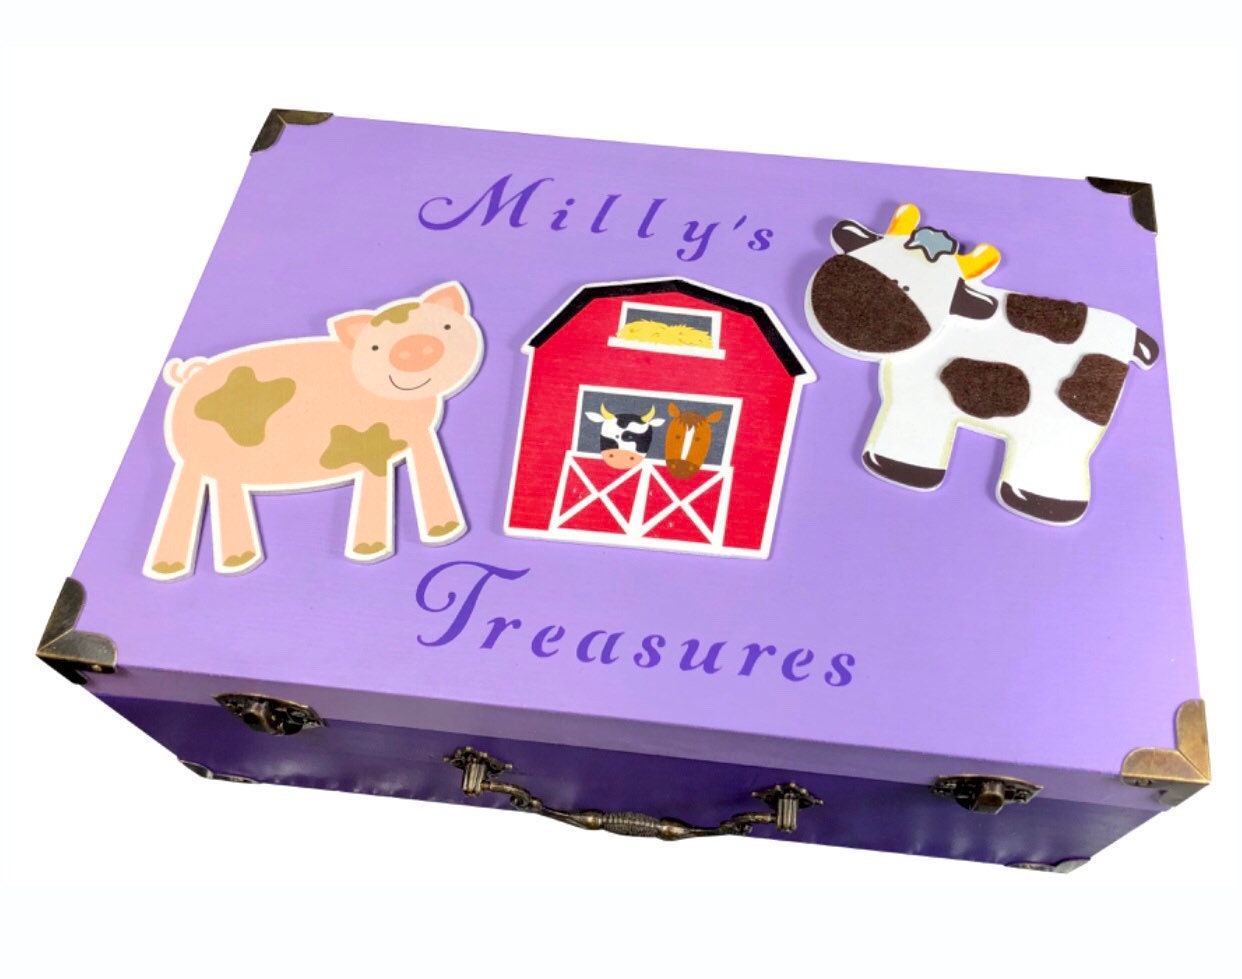 Boys military theme keepsake box / personalized kids boxes